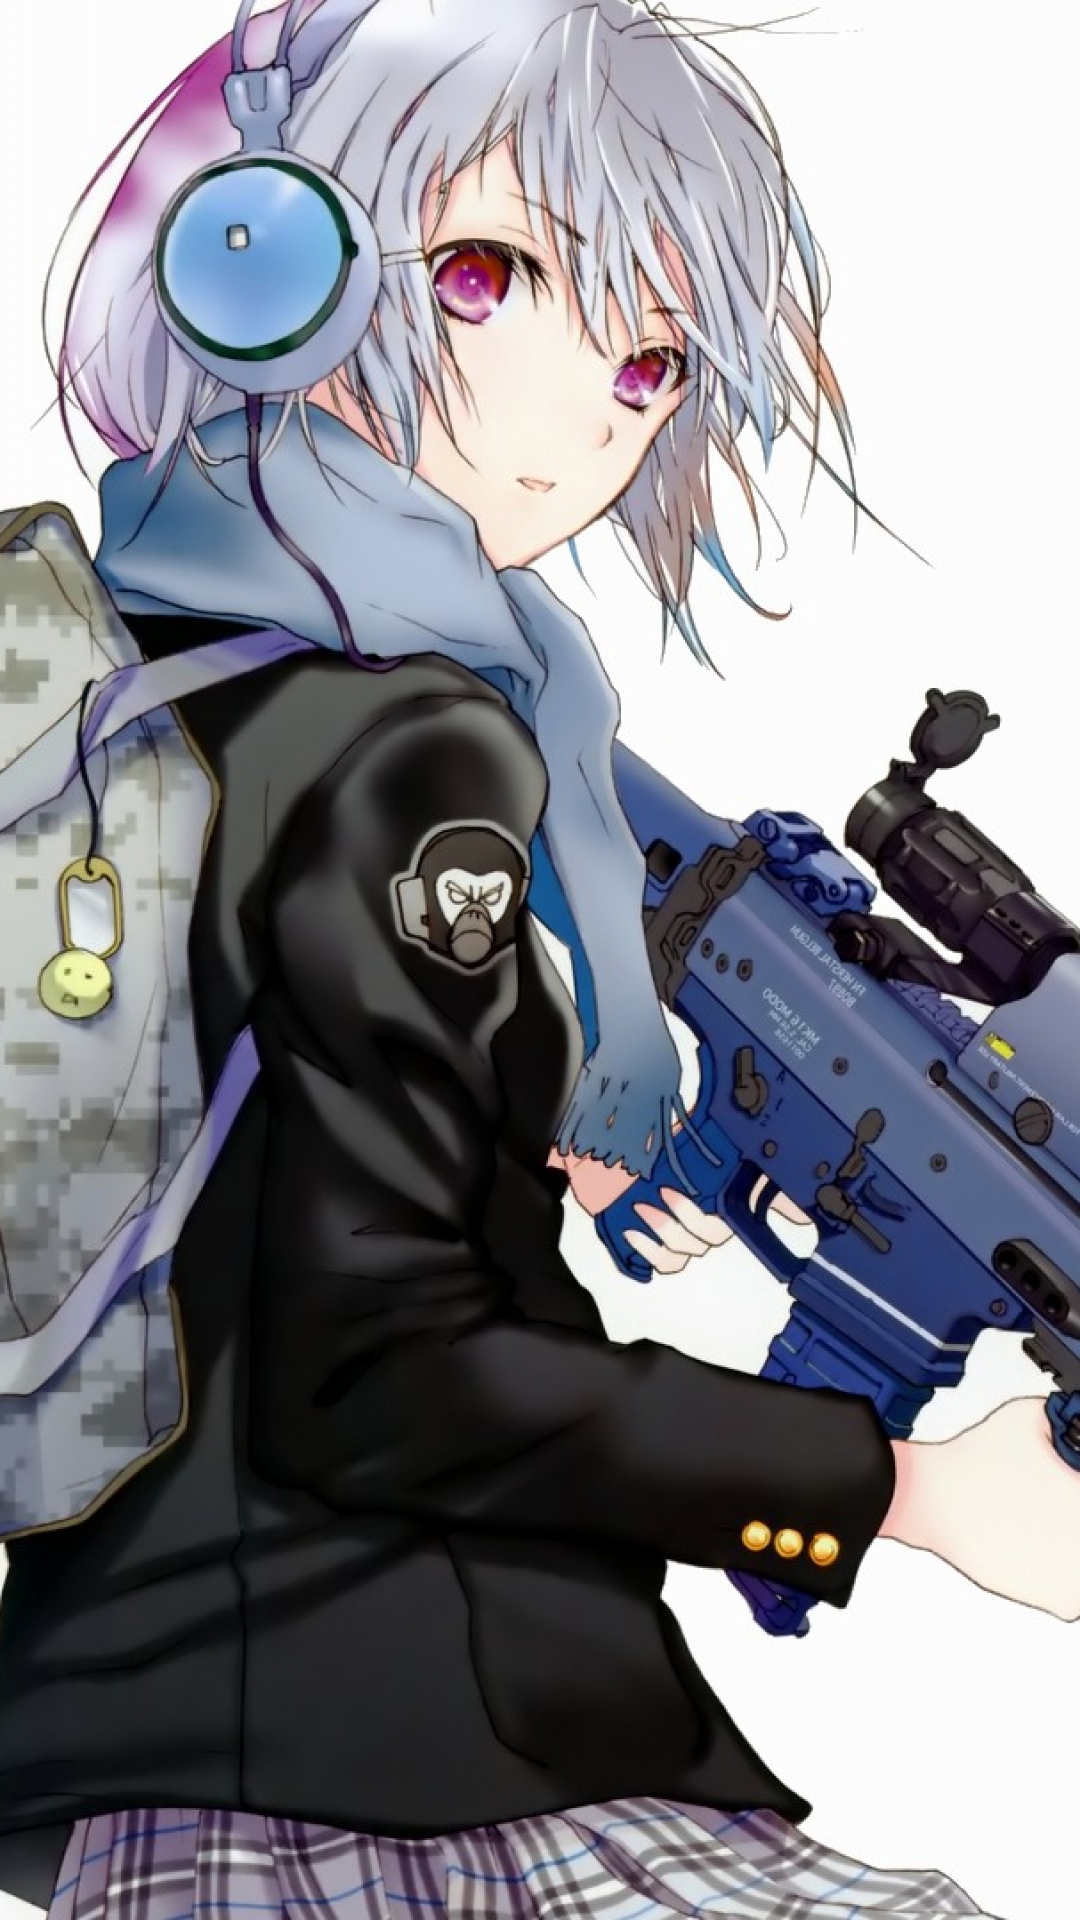 Wallpaper Anime Girl Attitude Backpack Weapons